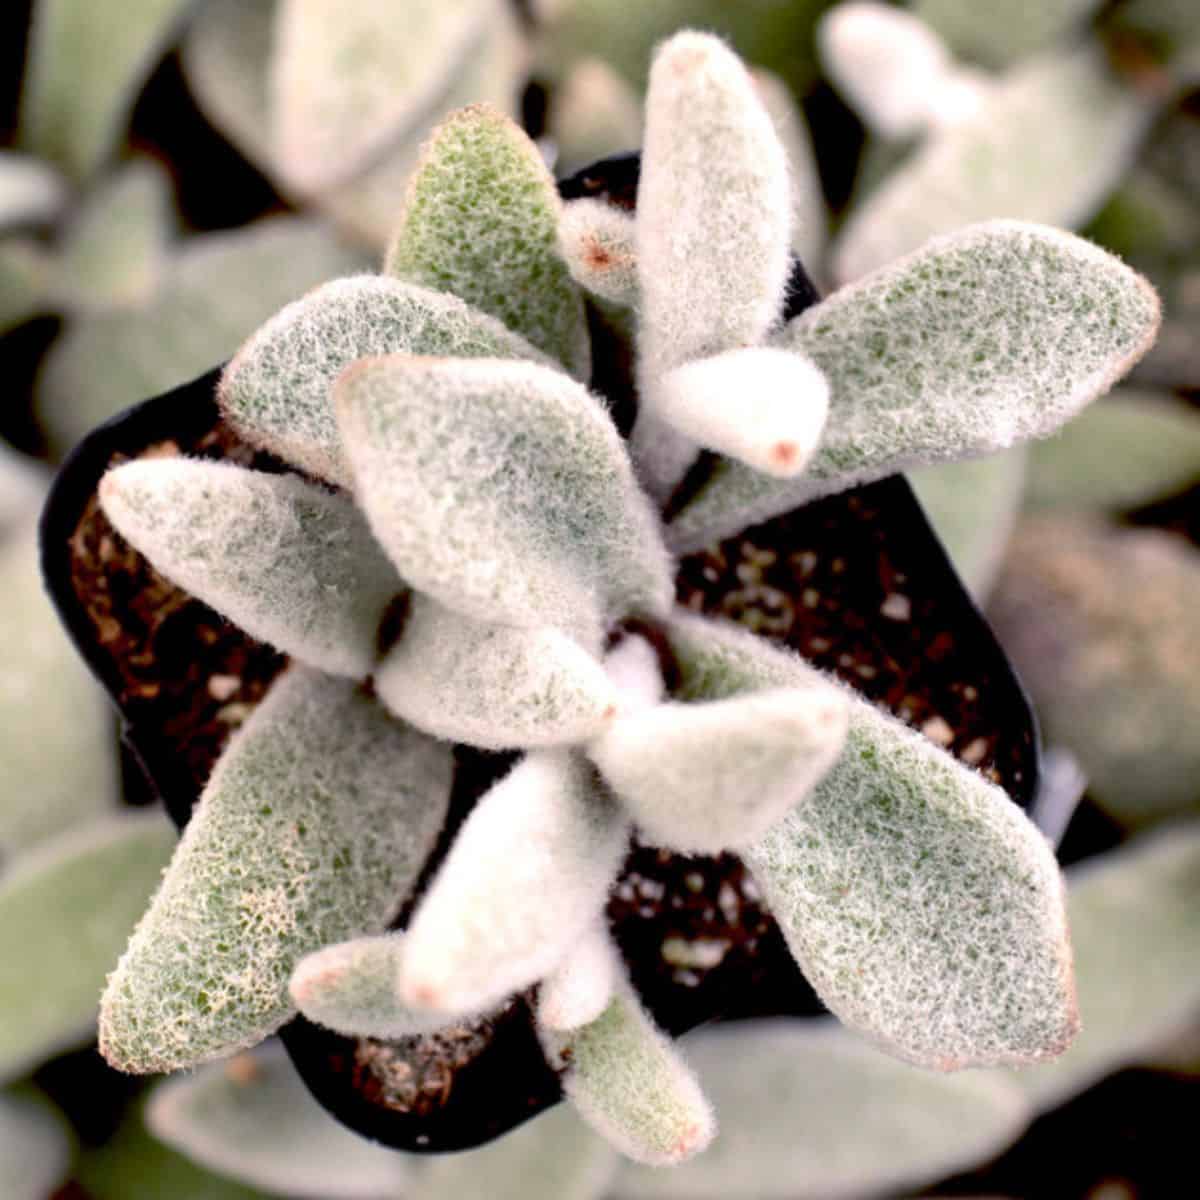 Kalanchoe eriophylla - Snow White Panda Plant in a pot.